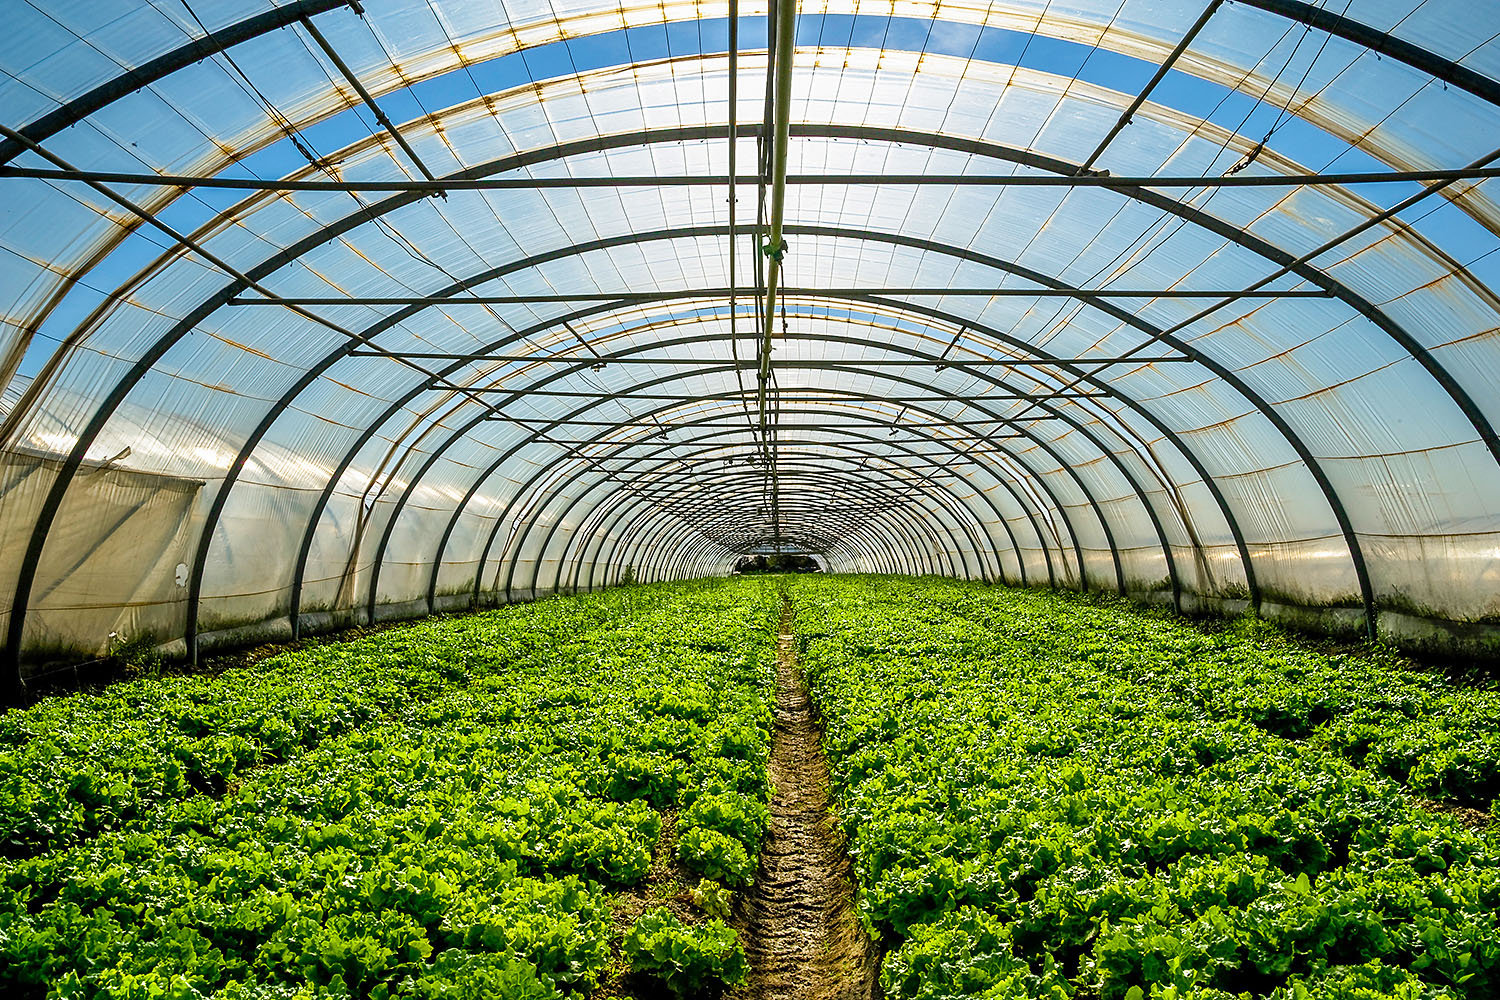 Teofipol municipality to build a greenhouse